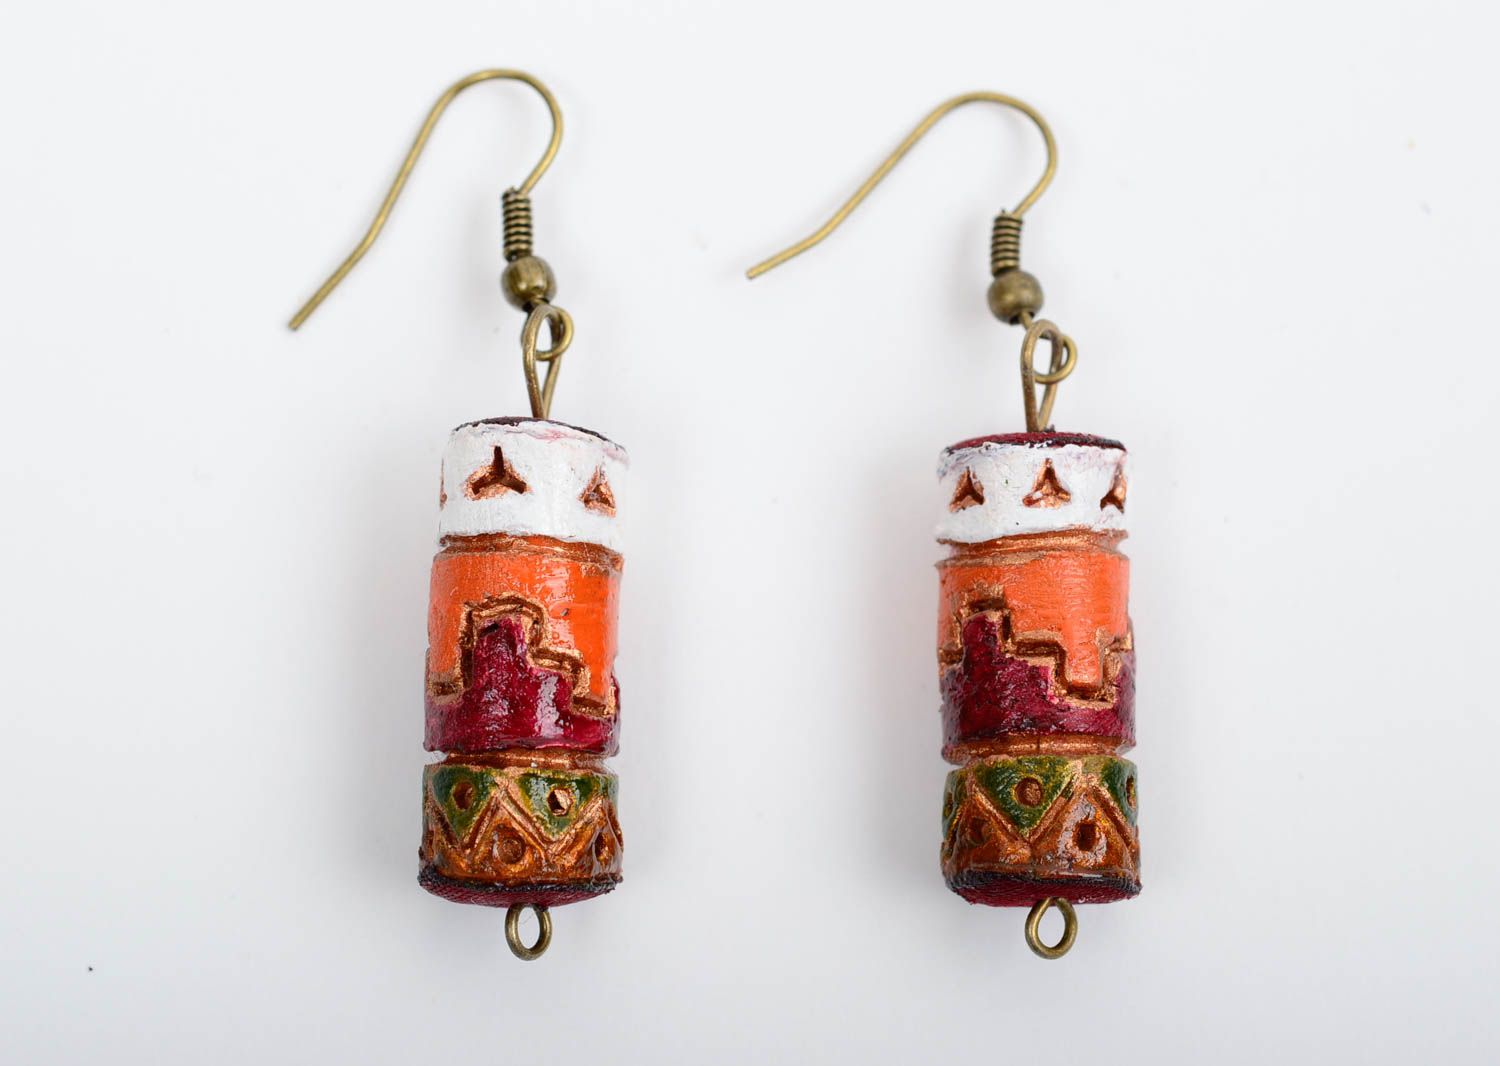 Stylish handmade ceramic earrings thread earrings beautiful jewellery gift ideas photo 1